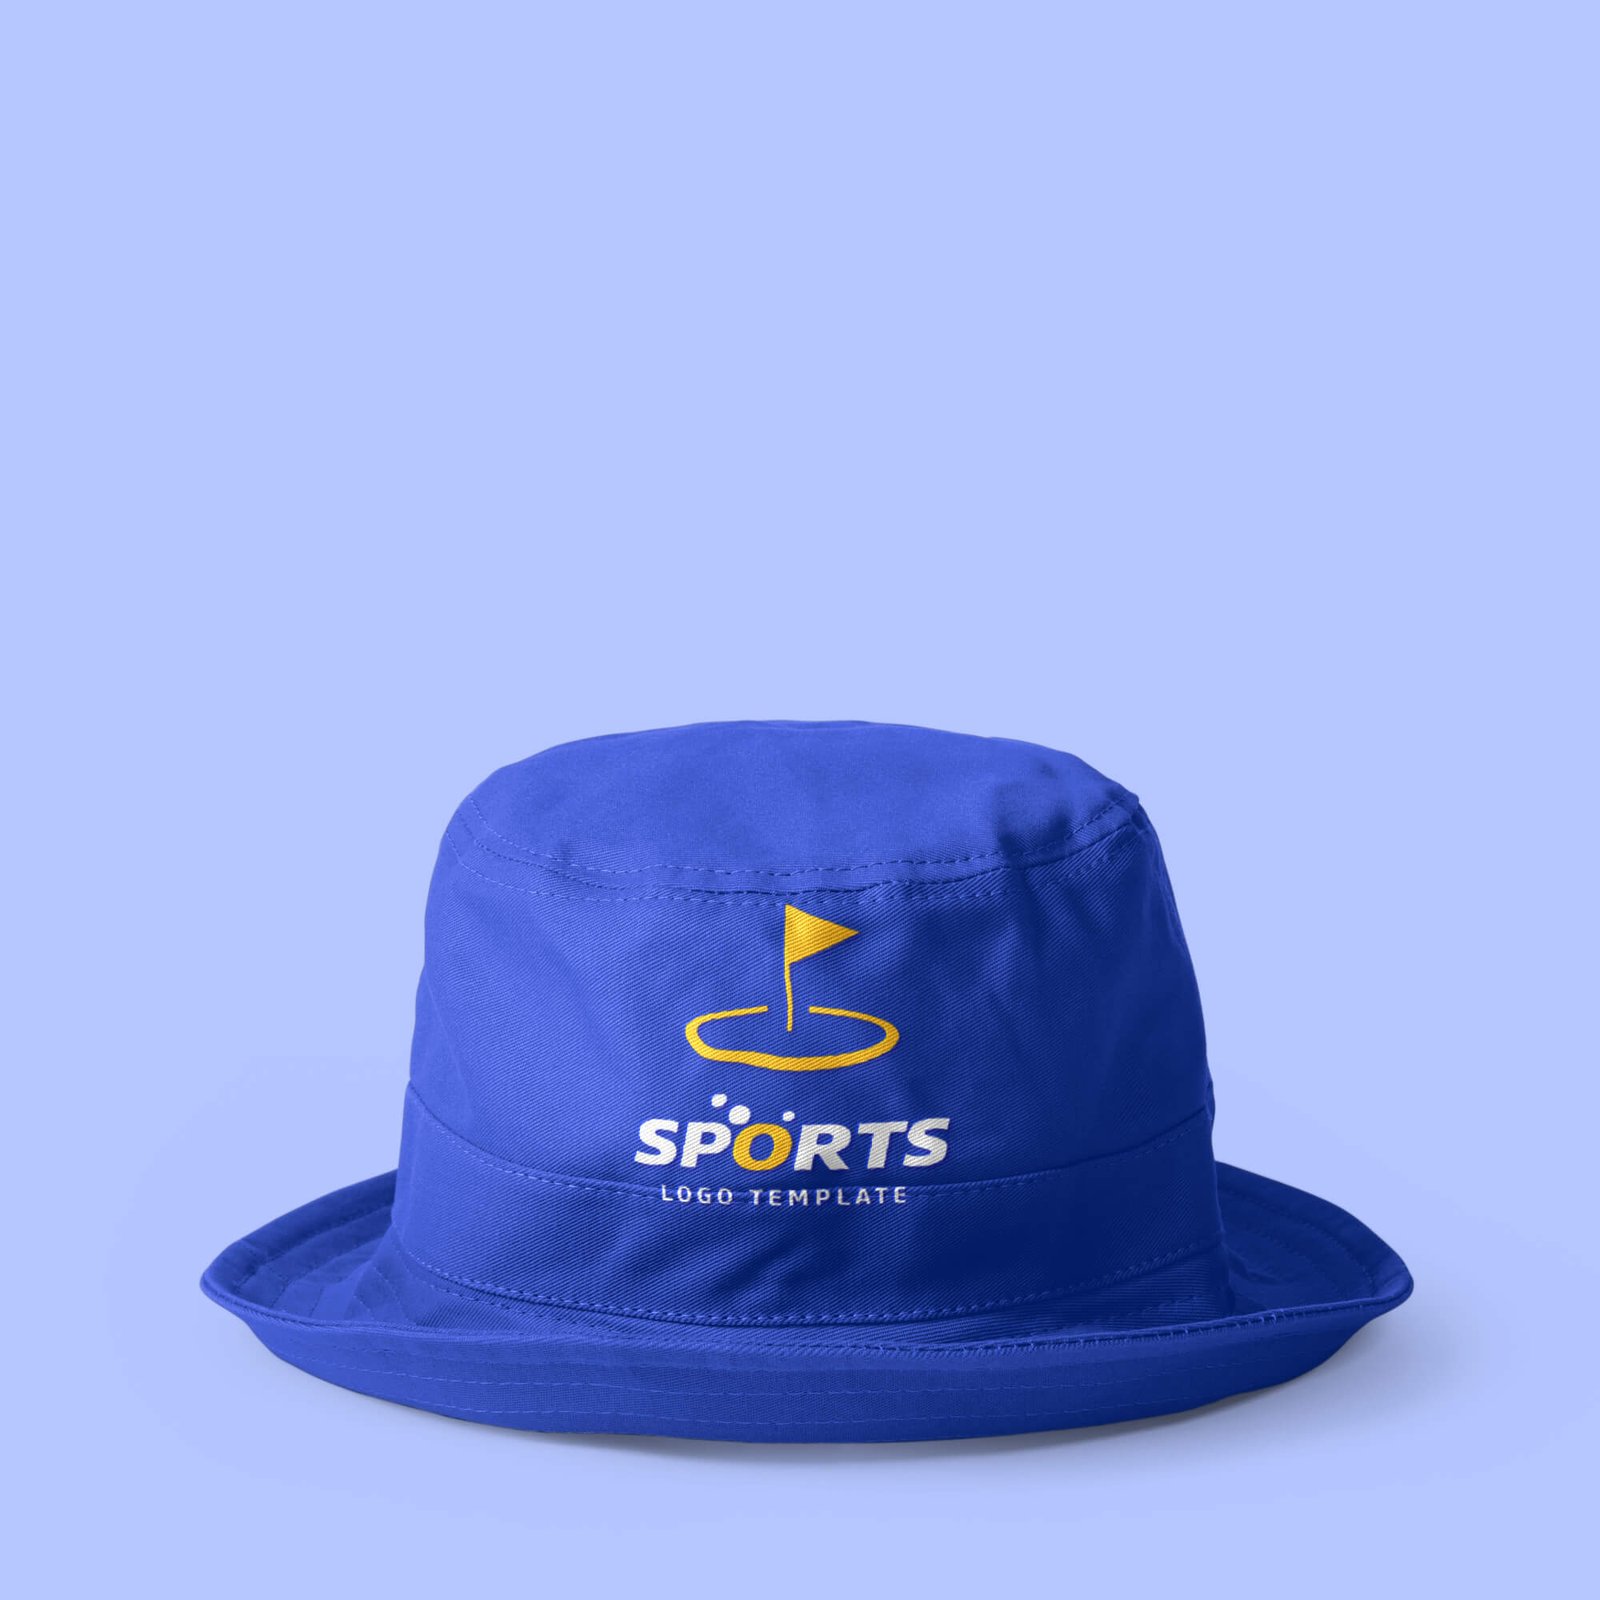 Design Free Hat logo Mockup PSD Template